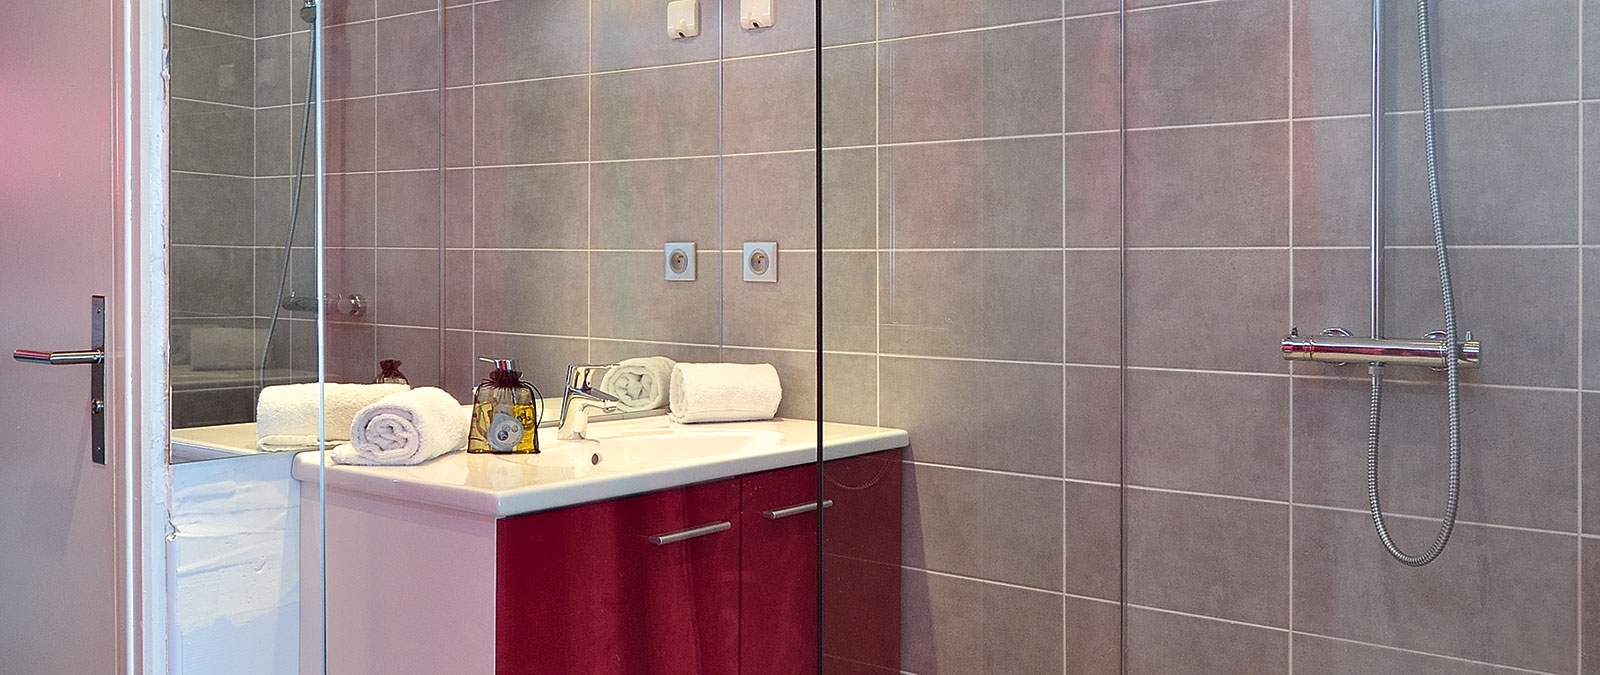 Bathroom with shower Grenadine naturist studio flat for rent